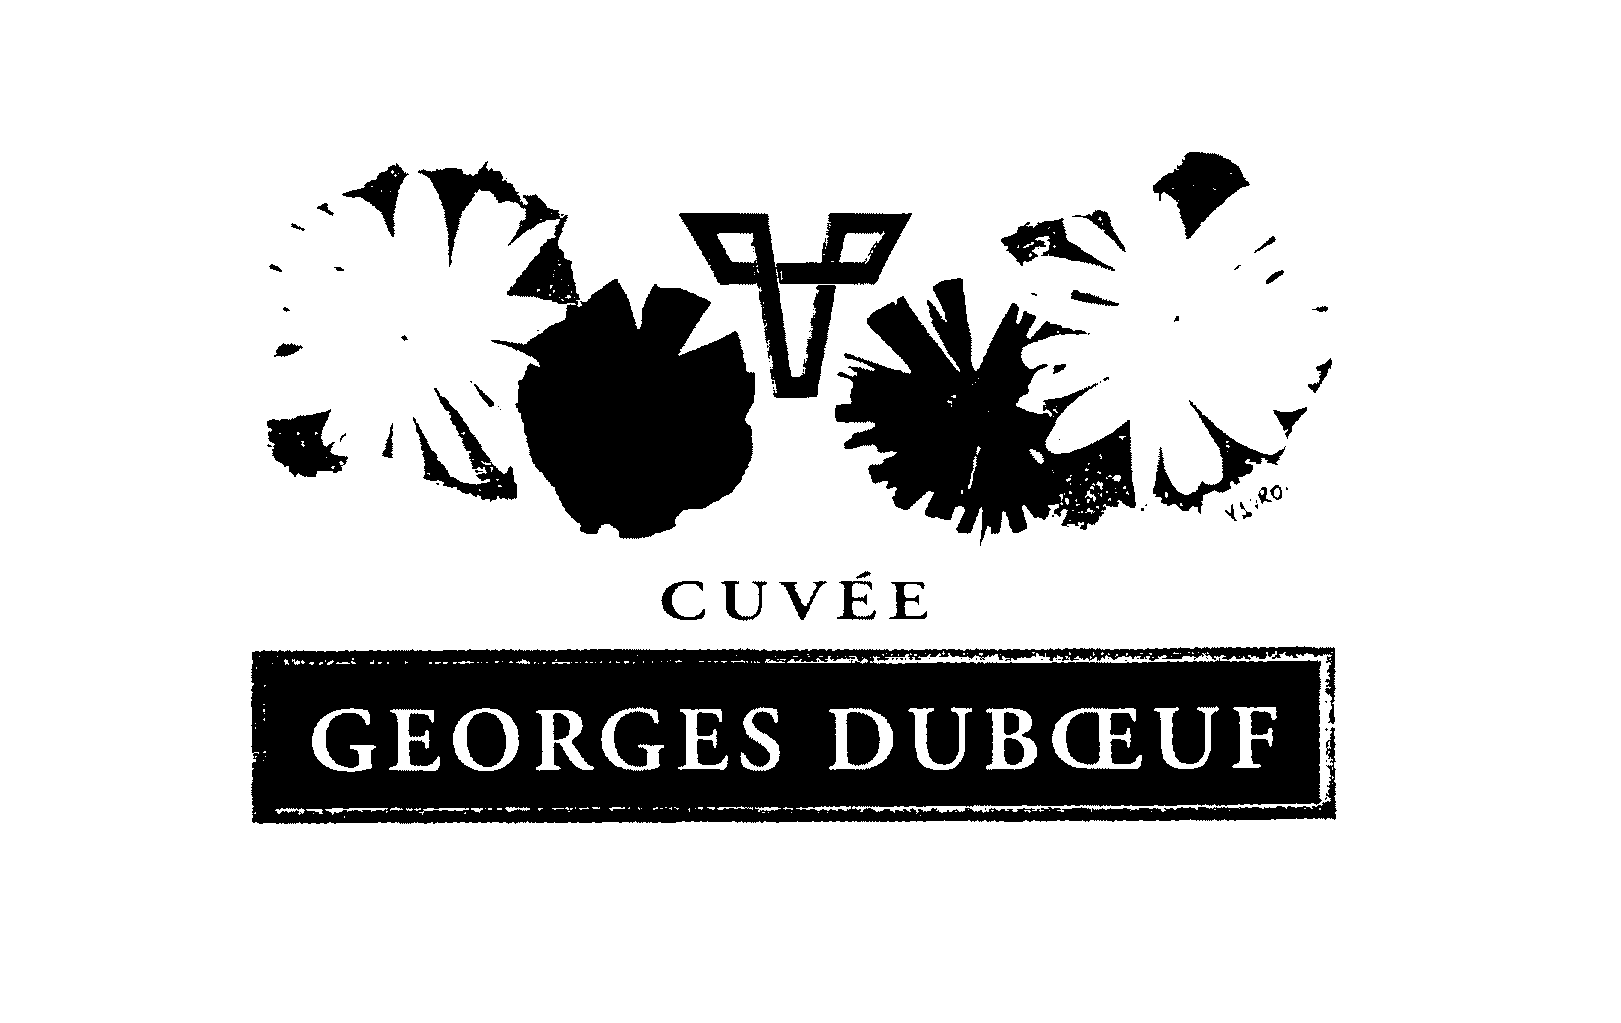  CUVEE GEORGES DUBOEUF